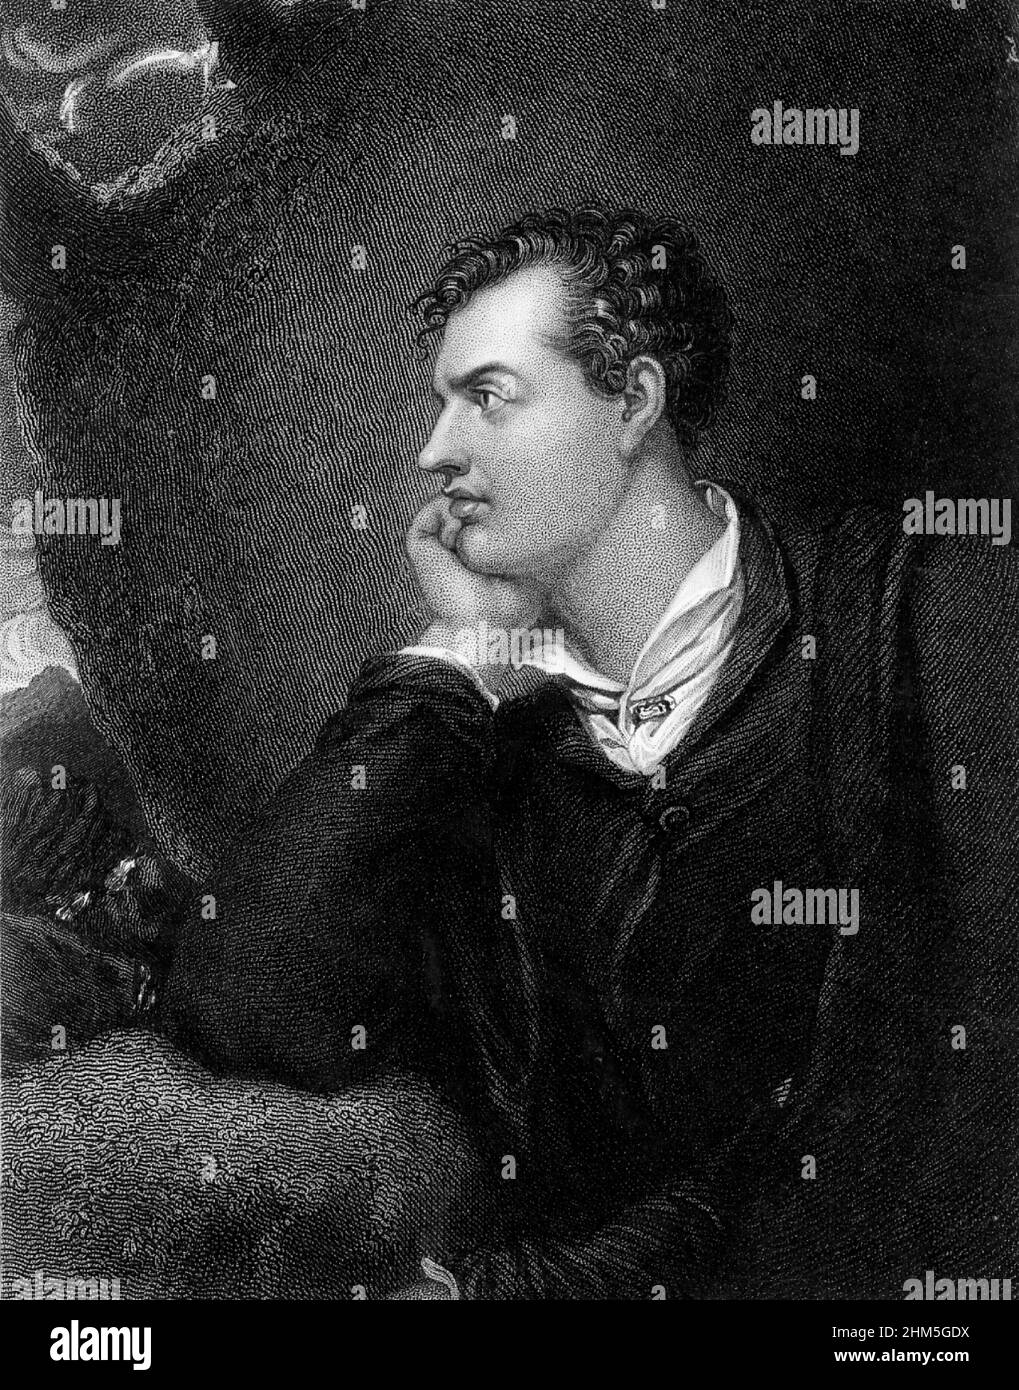 Portrait of George Gordon, Lord Byron (1788-1824) - Engraving, 19th century Stock Photo